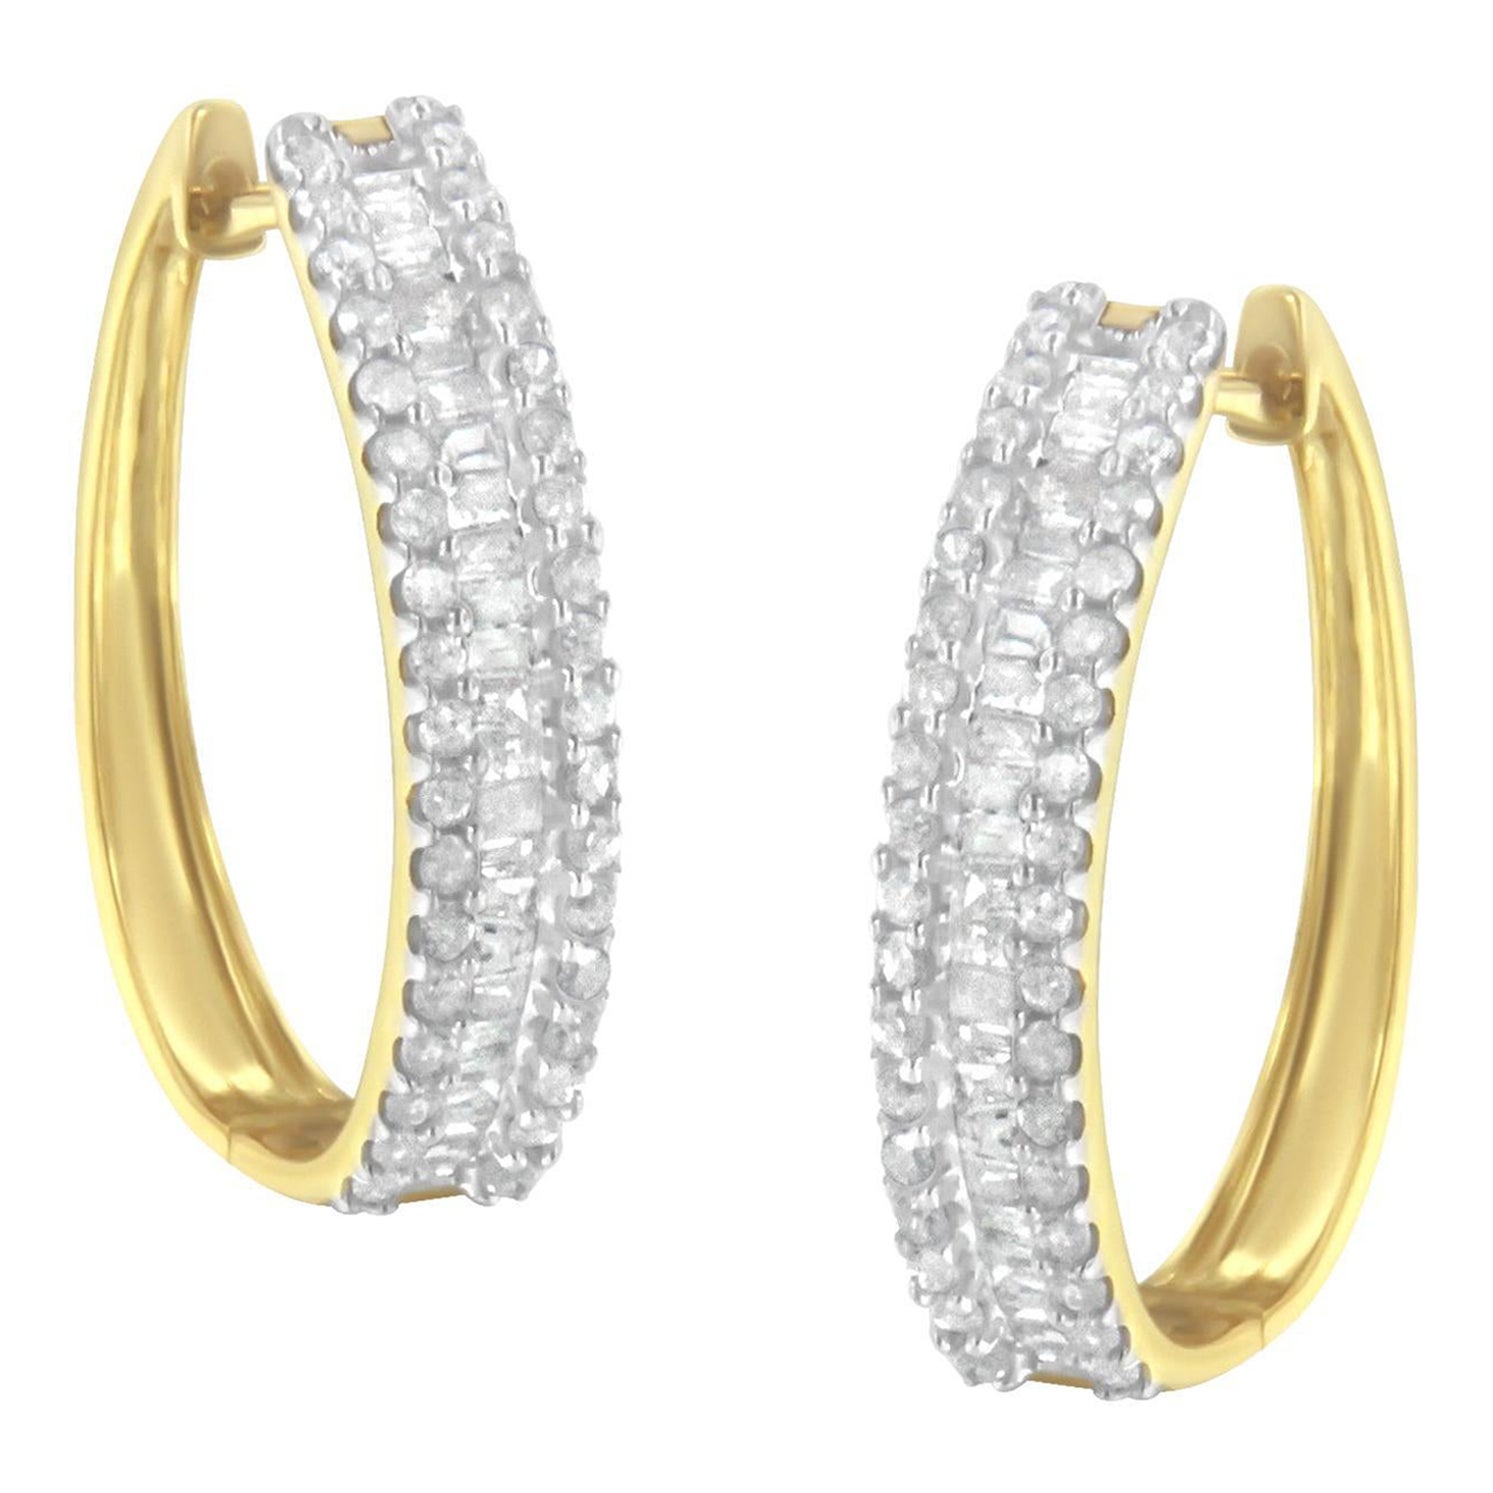 10K Yellow Gold 3/4 Carat Diamond Hoop Earrings